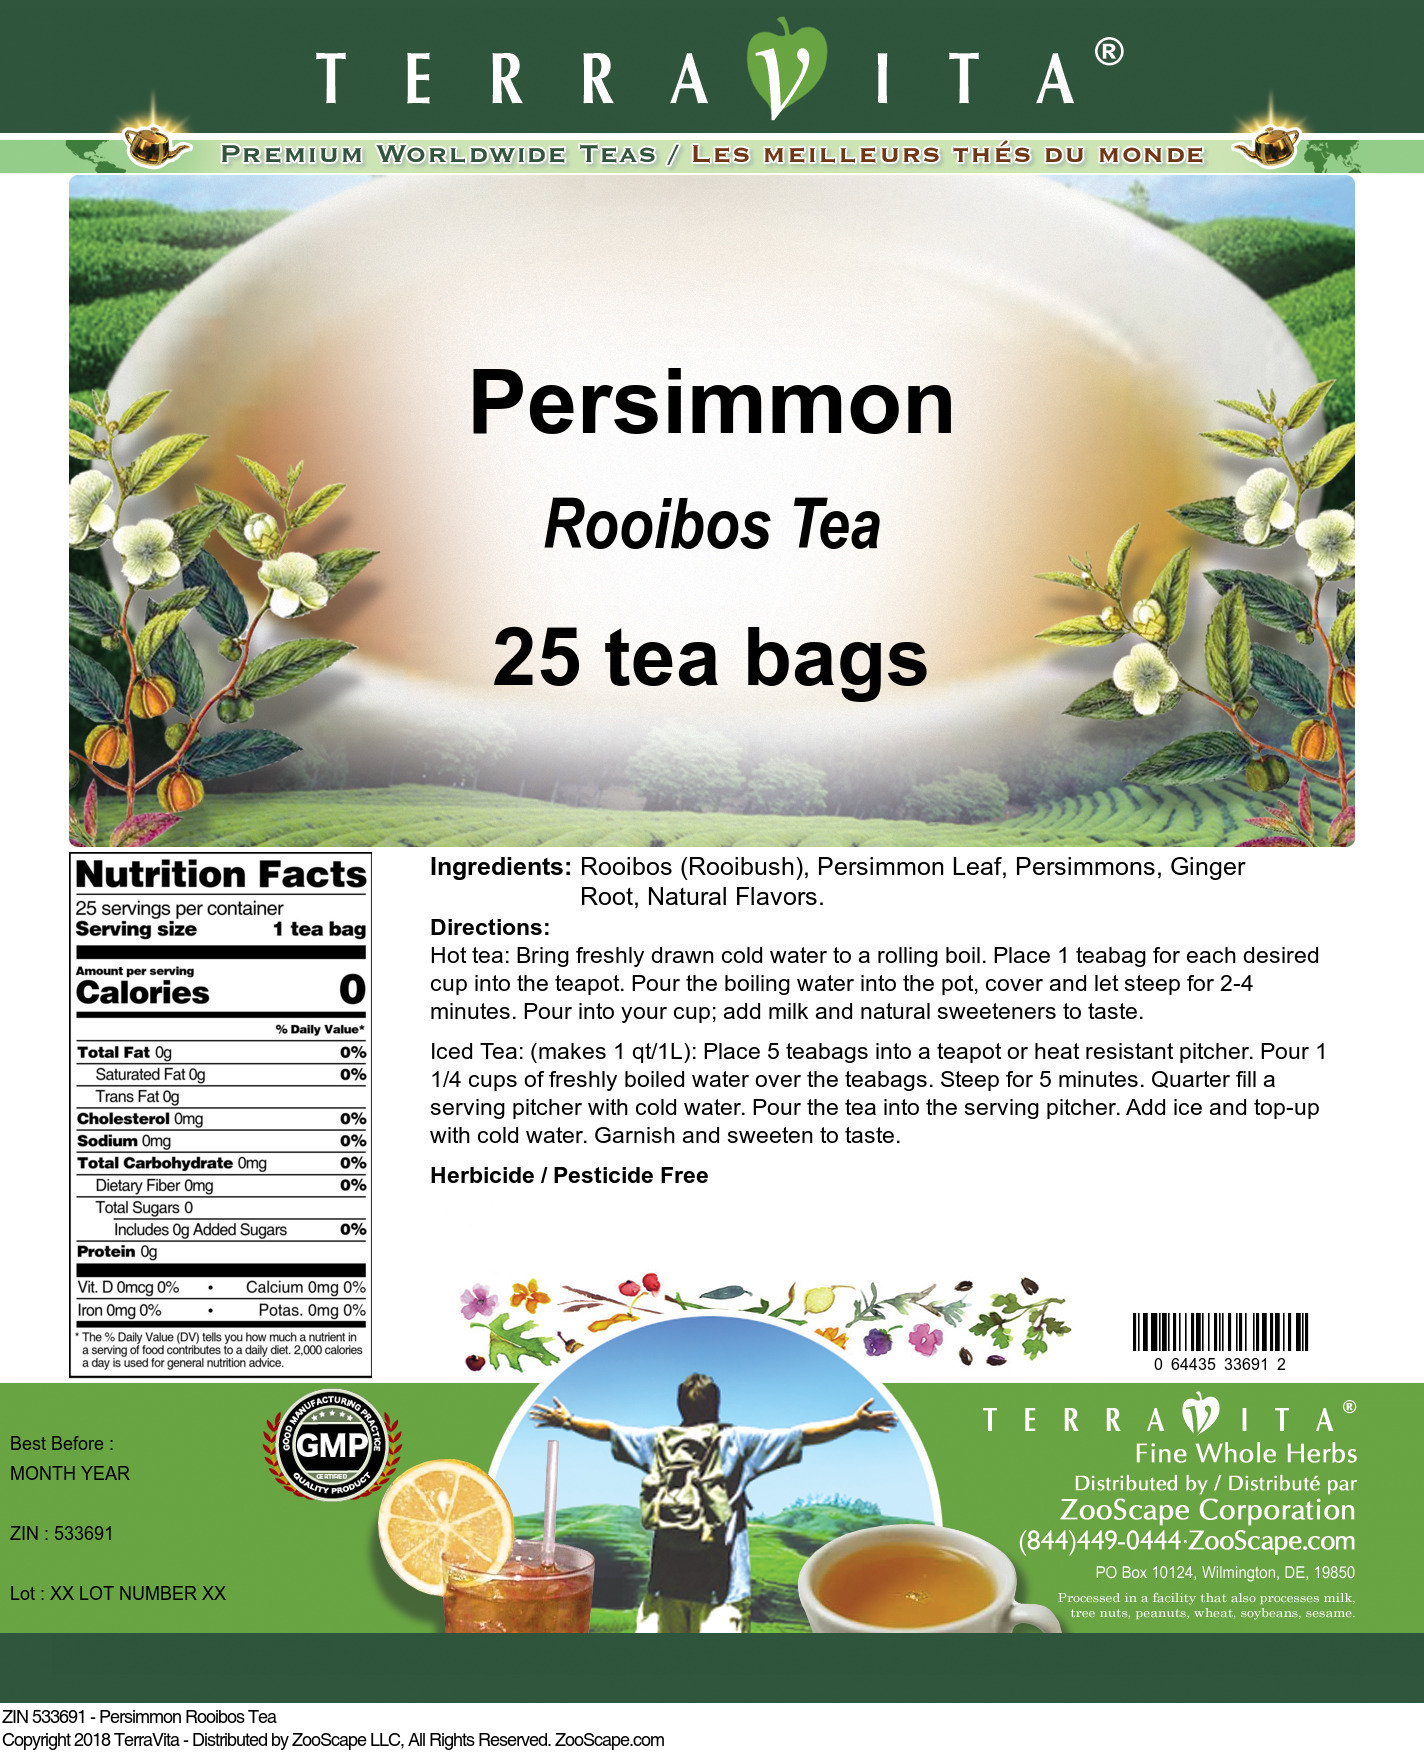 Persimmon Rooibos Tea - Label